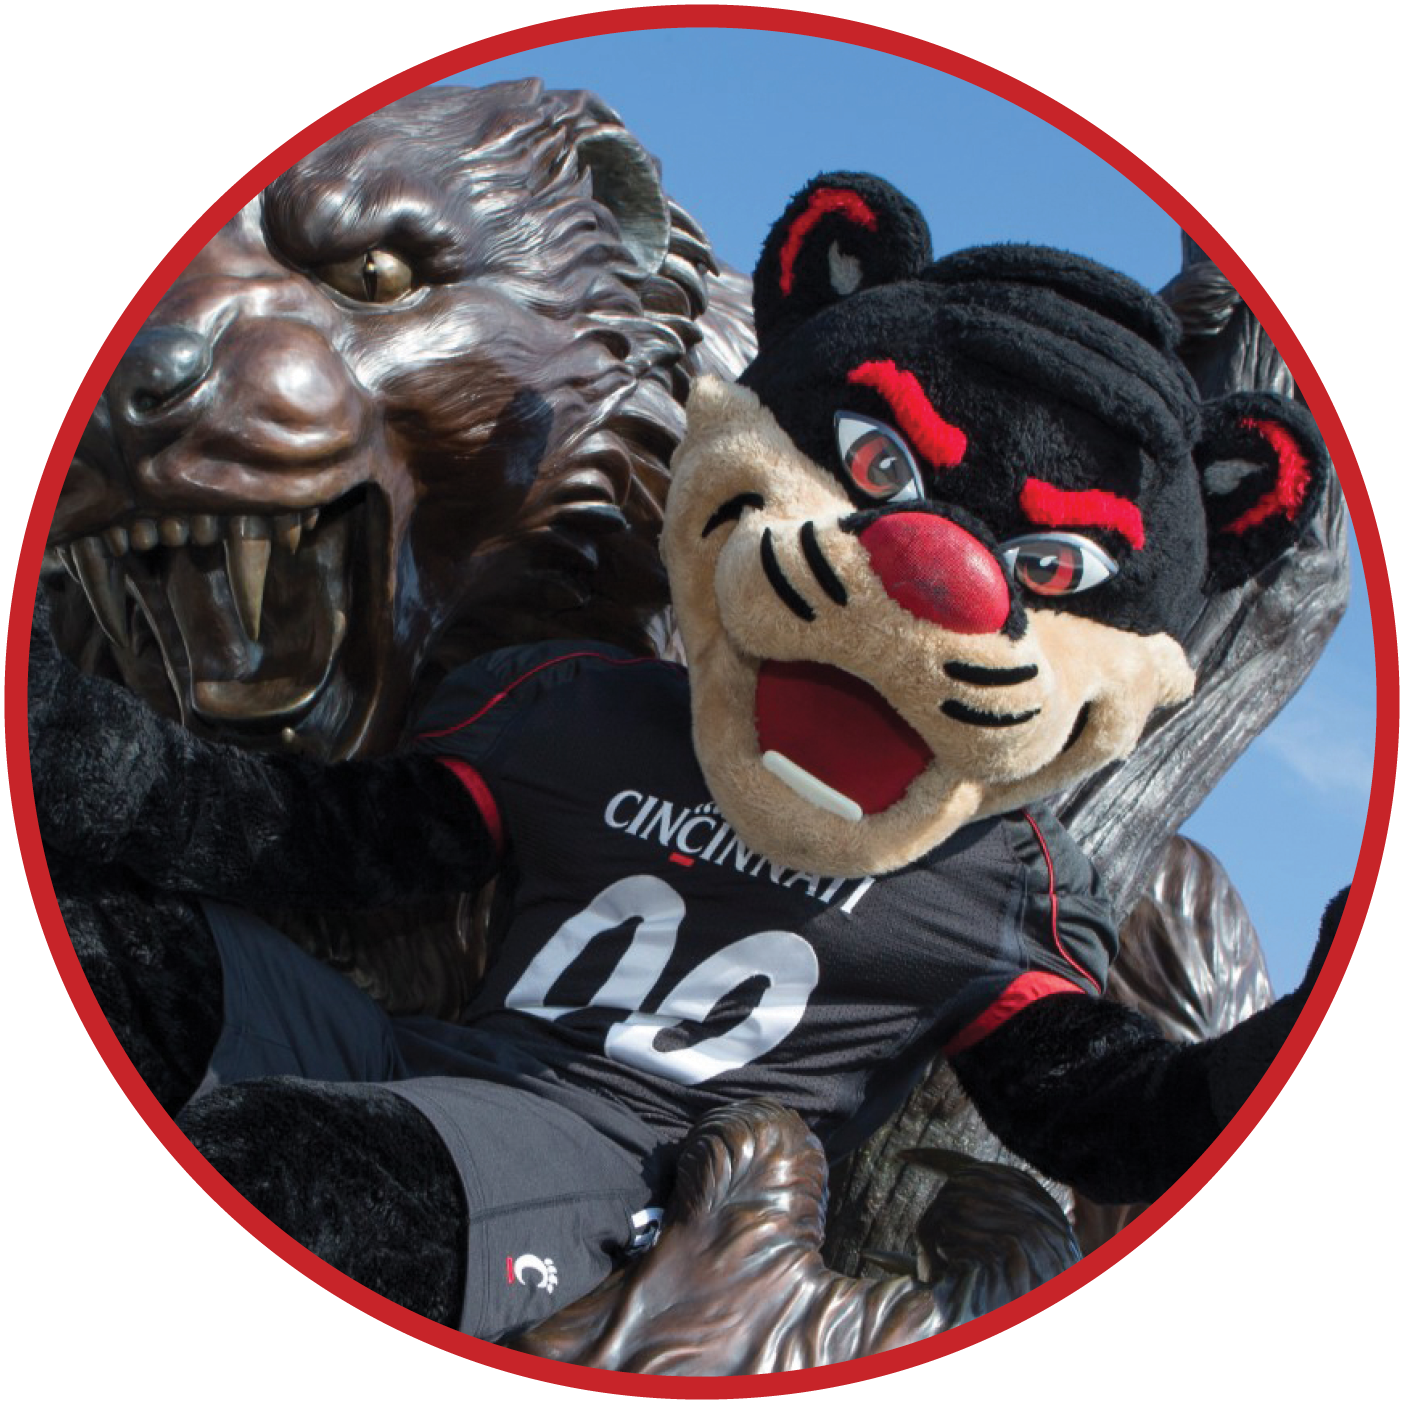 The bearcat mascot at University of Cincinnati